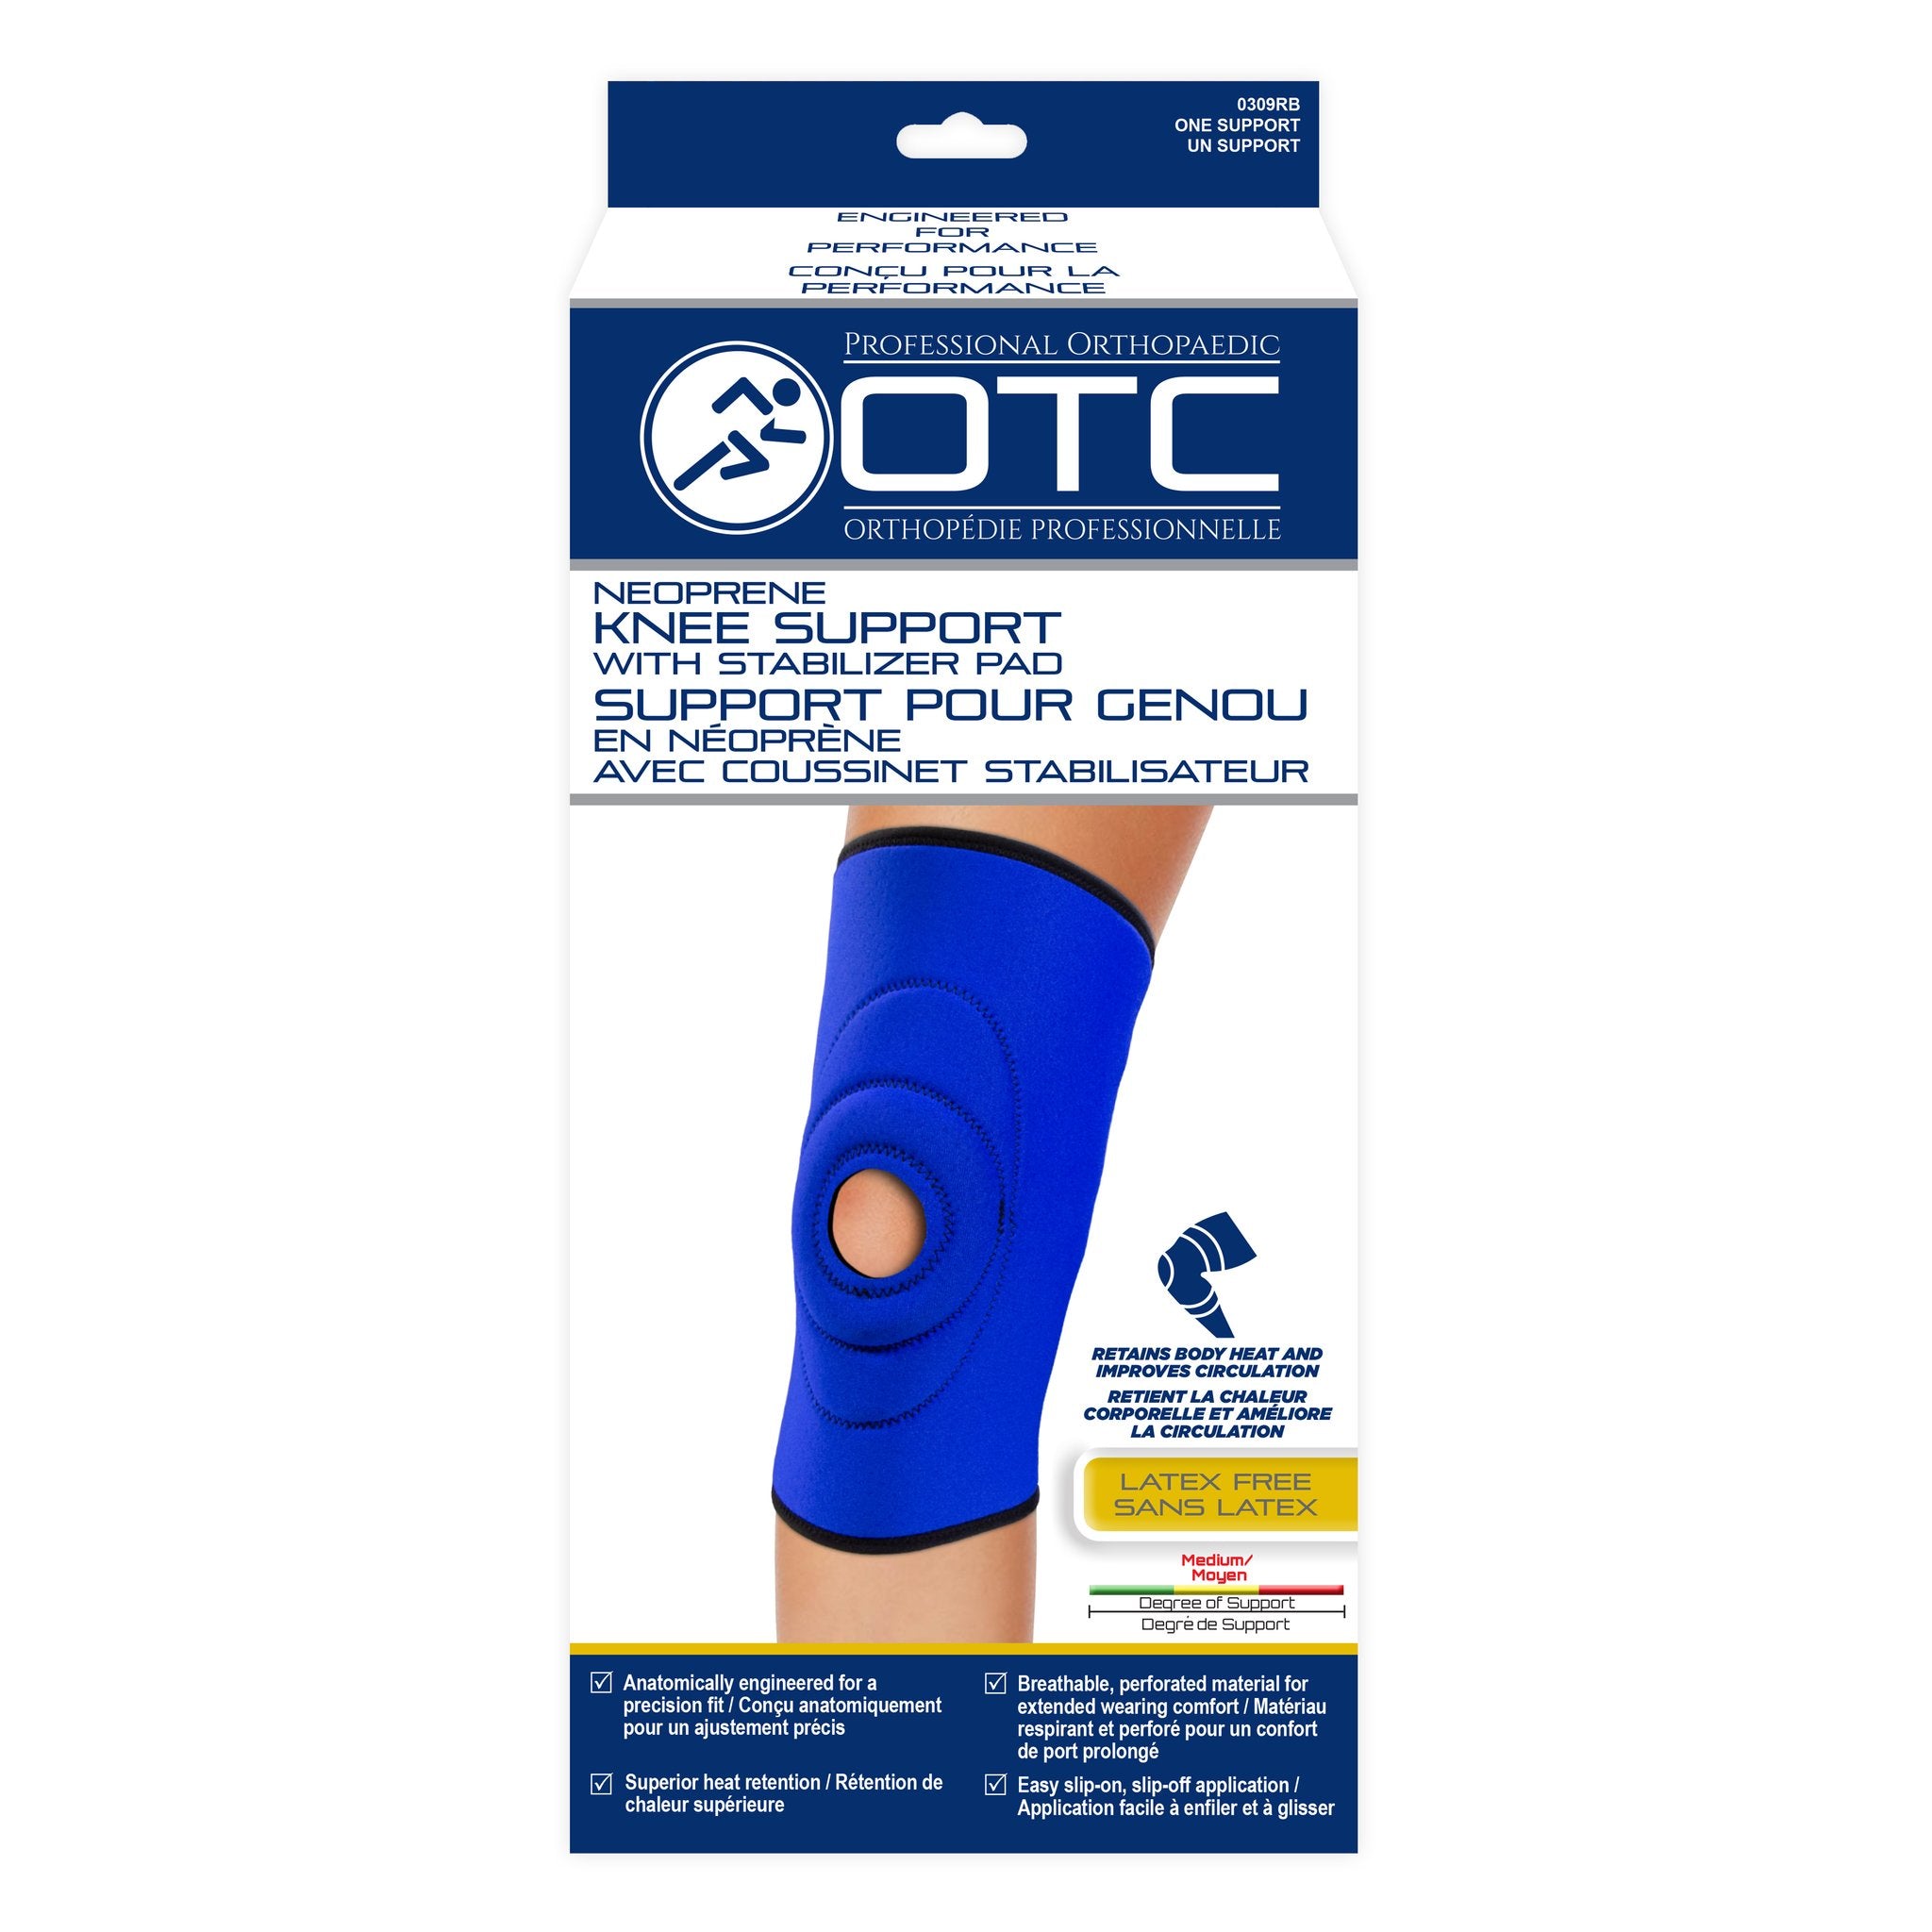 Neoprene Knee Support - Stabilizer Pad by OTC